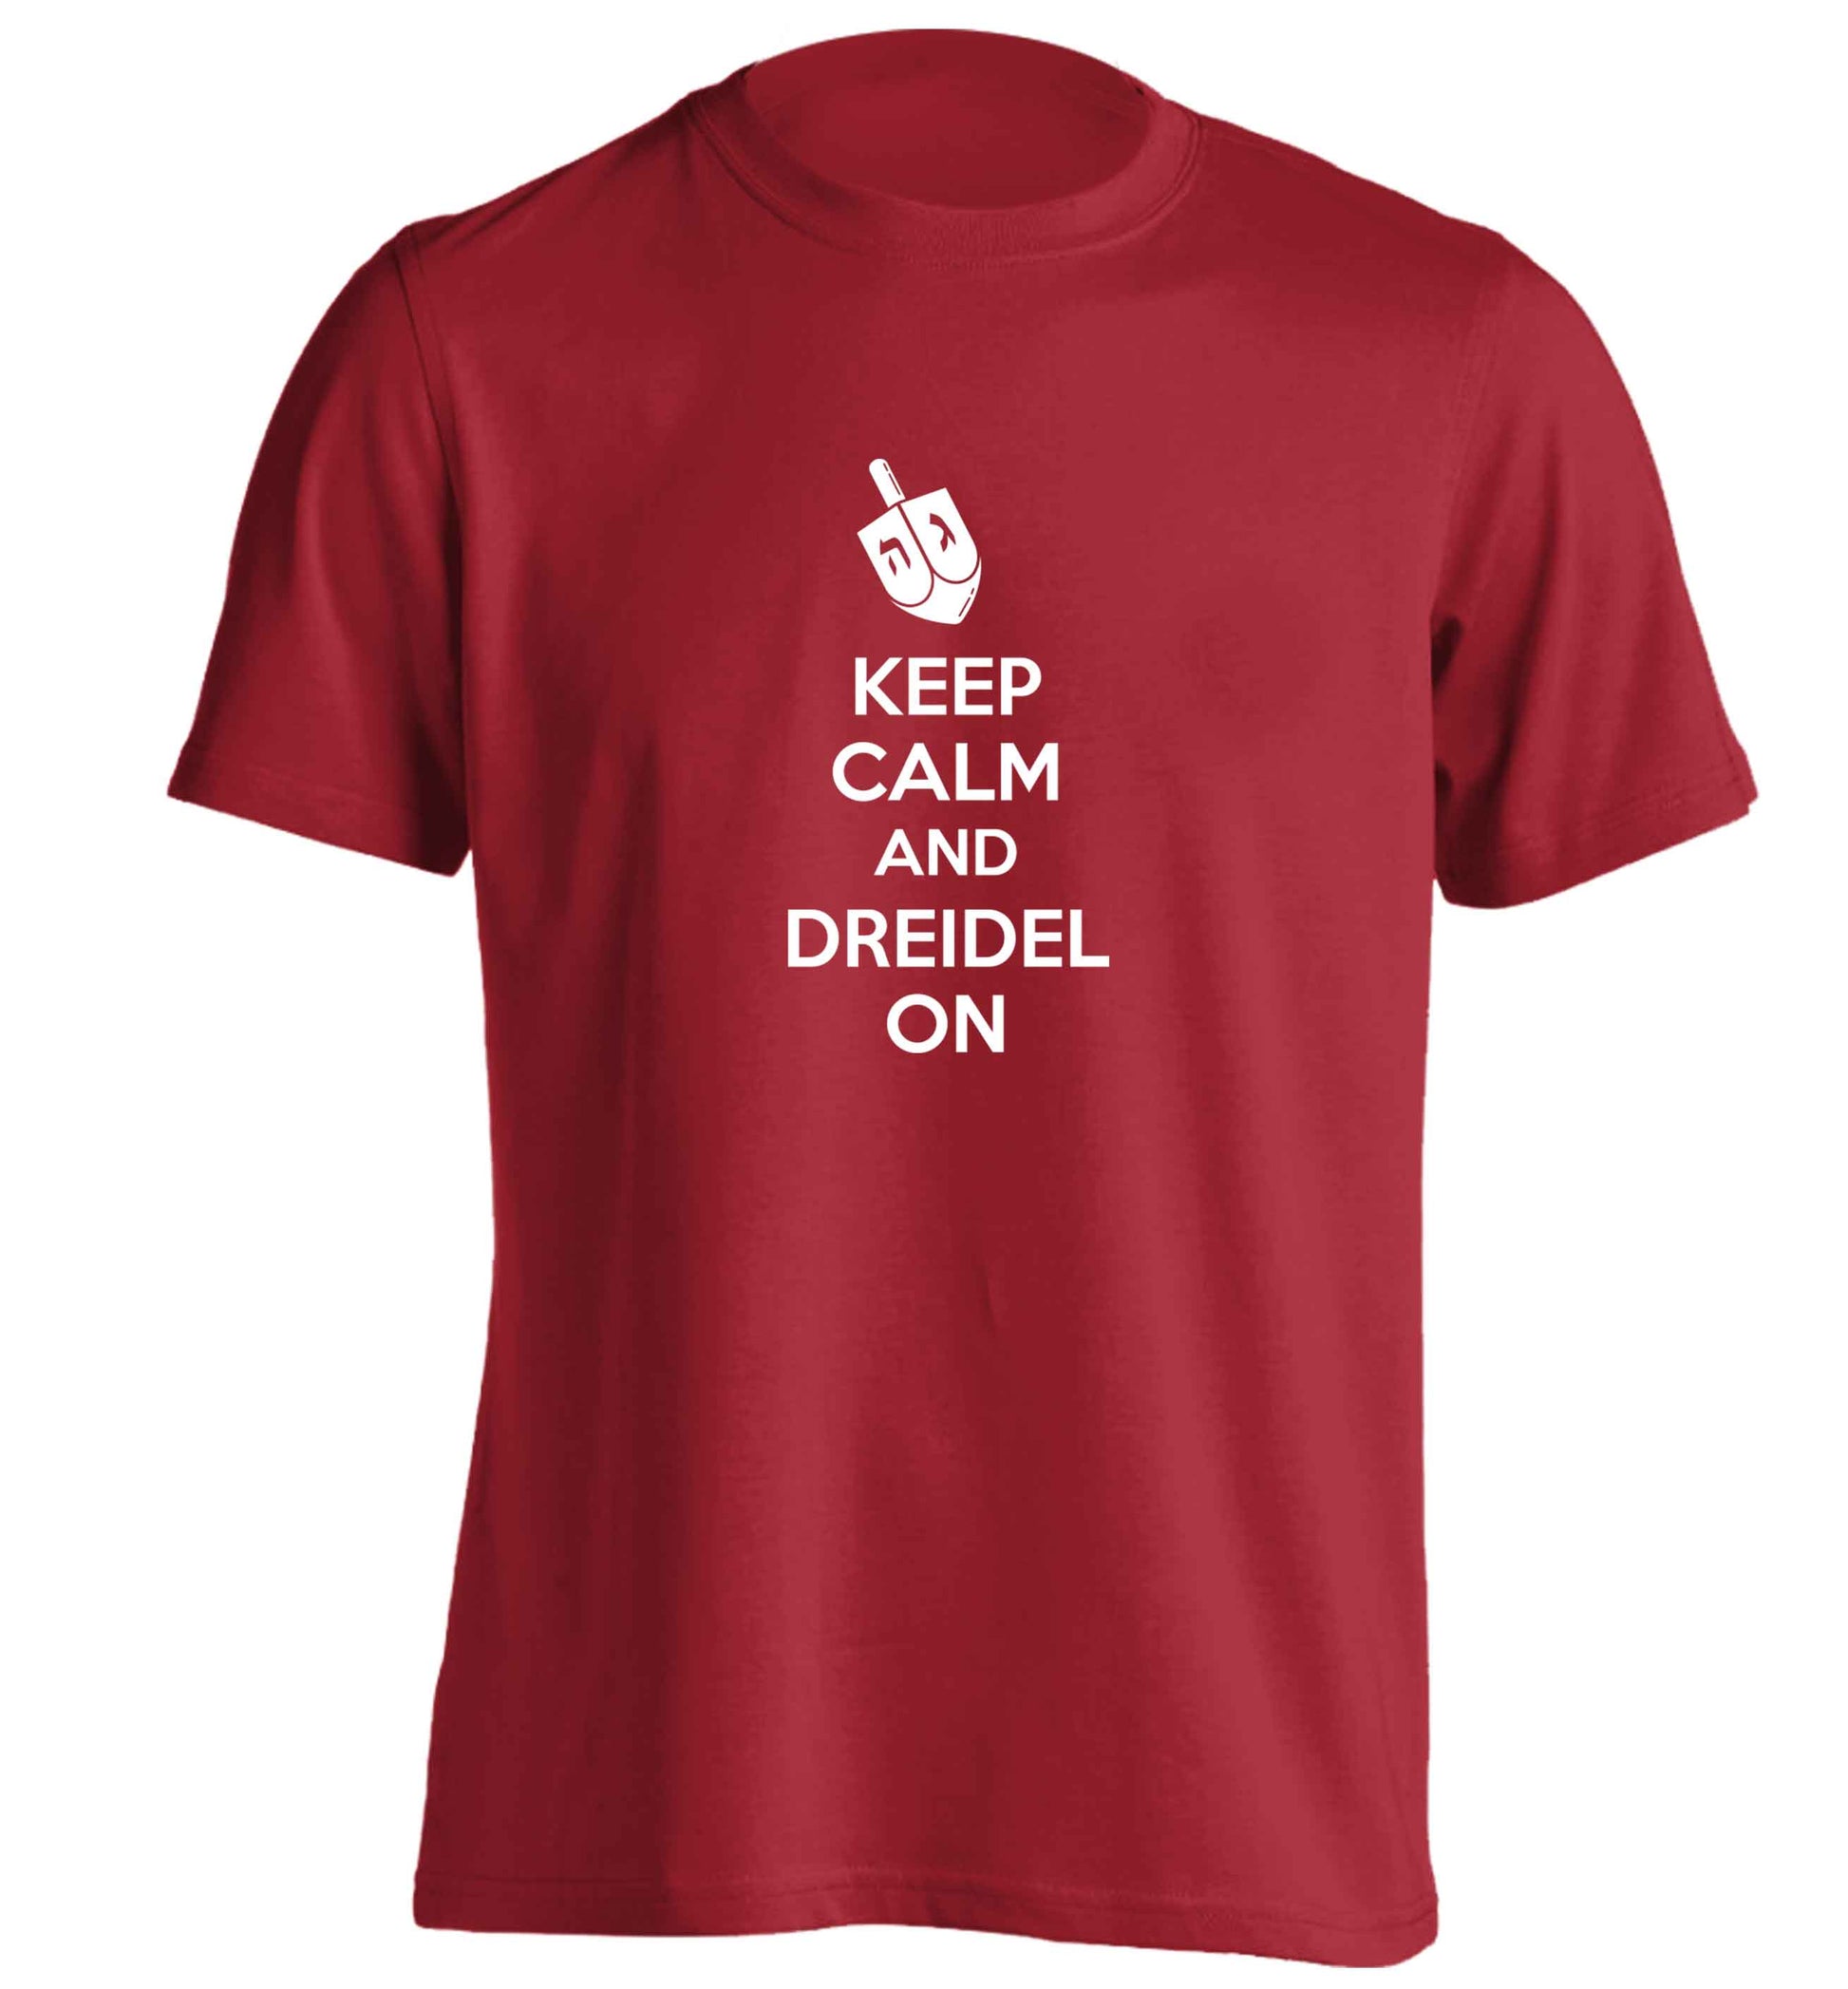 Keep calm and dreidel on adults unisex red Tshirt 2XL